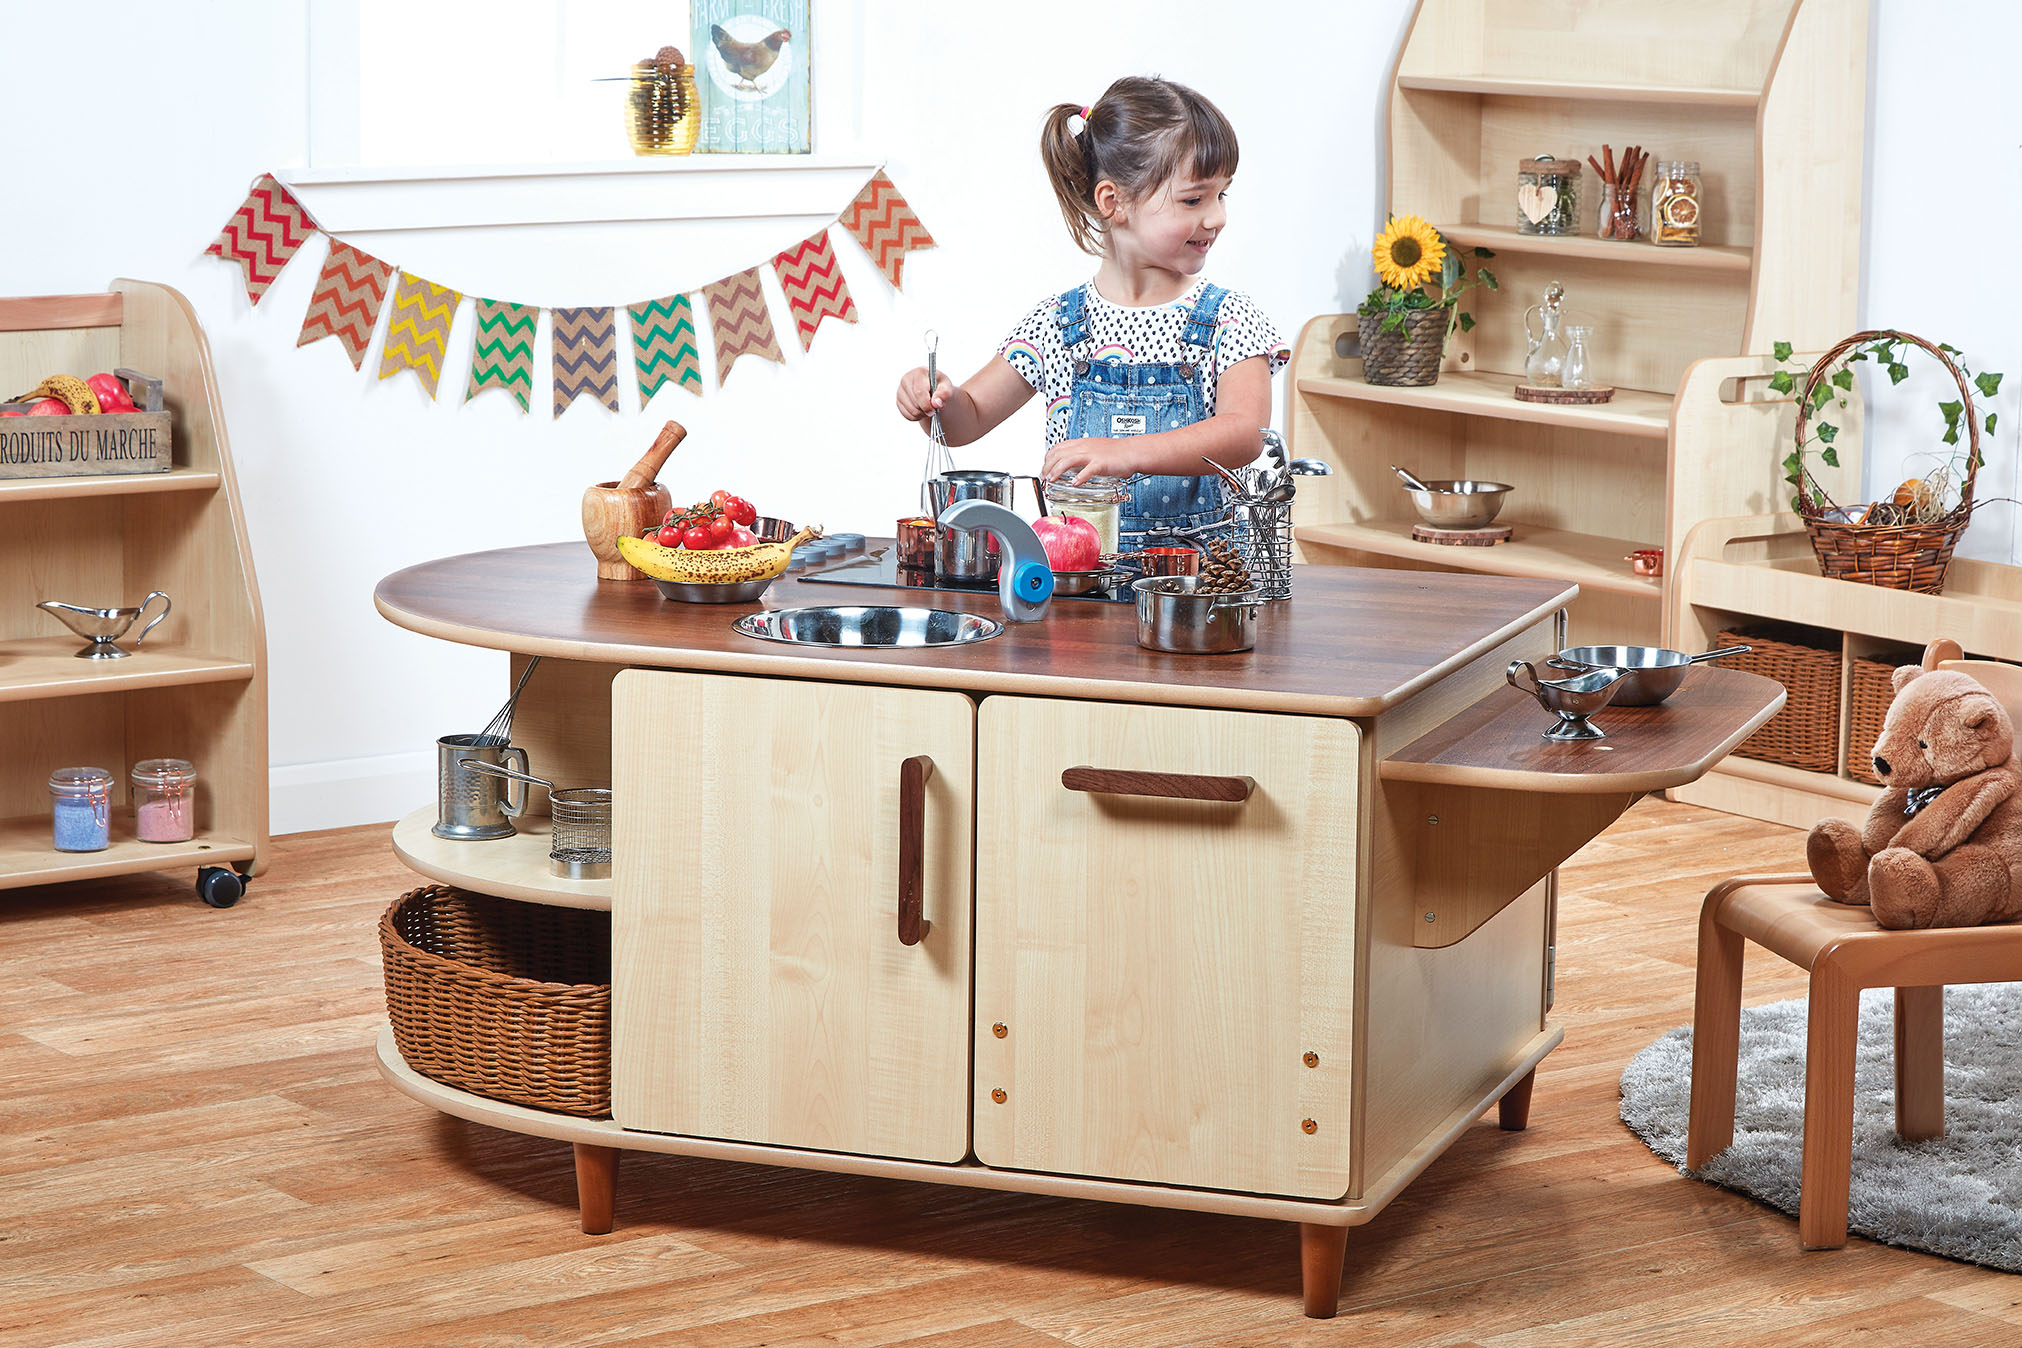 PT996-Millhouse-Early-Years-Furniture-Prechool-Island-Kitchen_Lifestyle_RGB.jpg